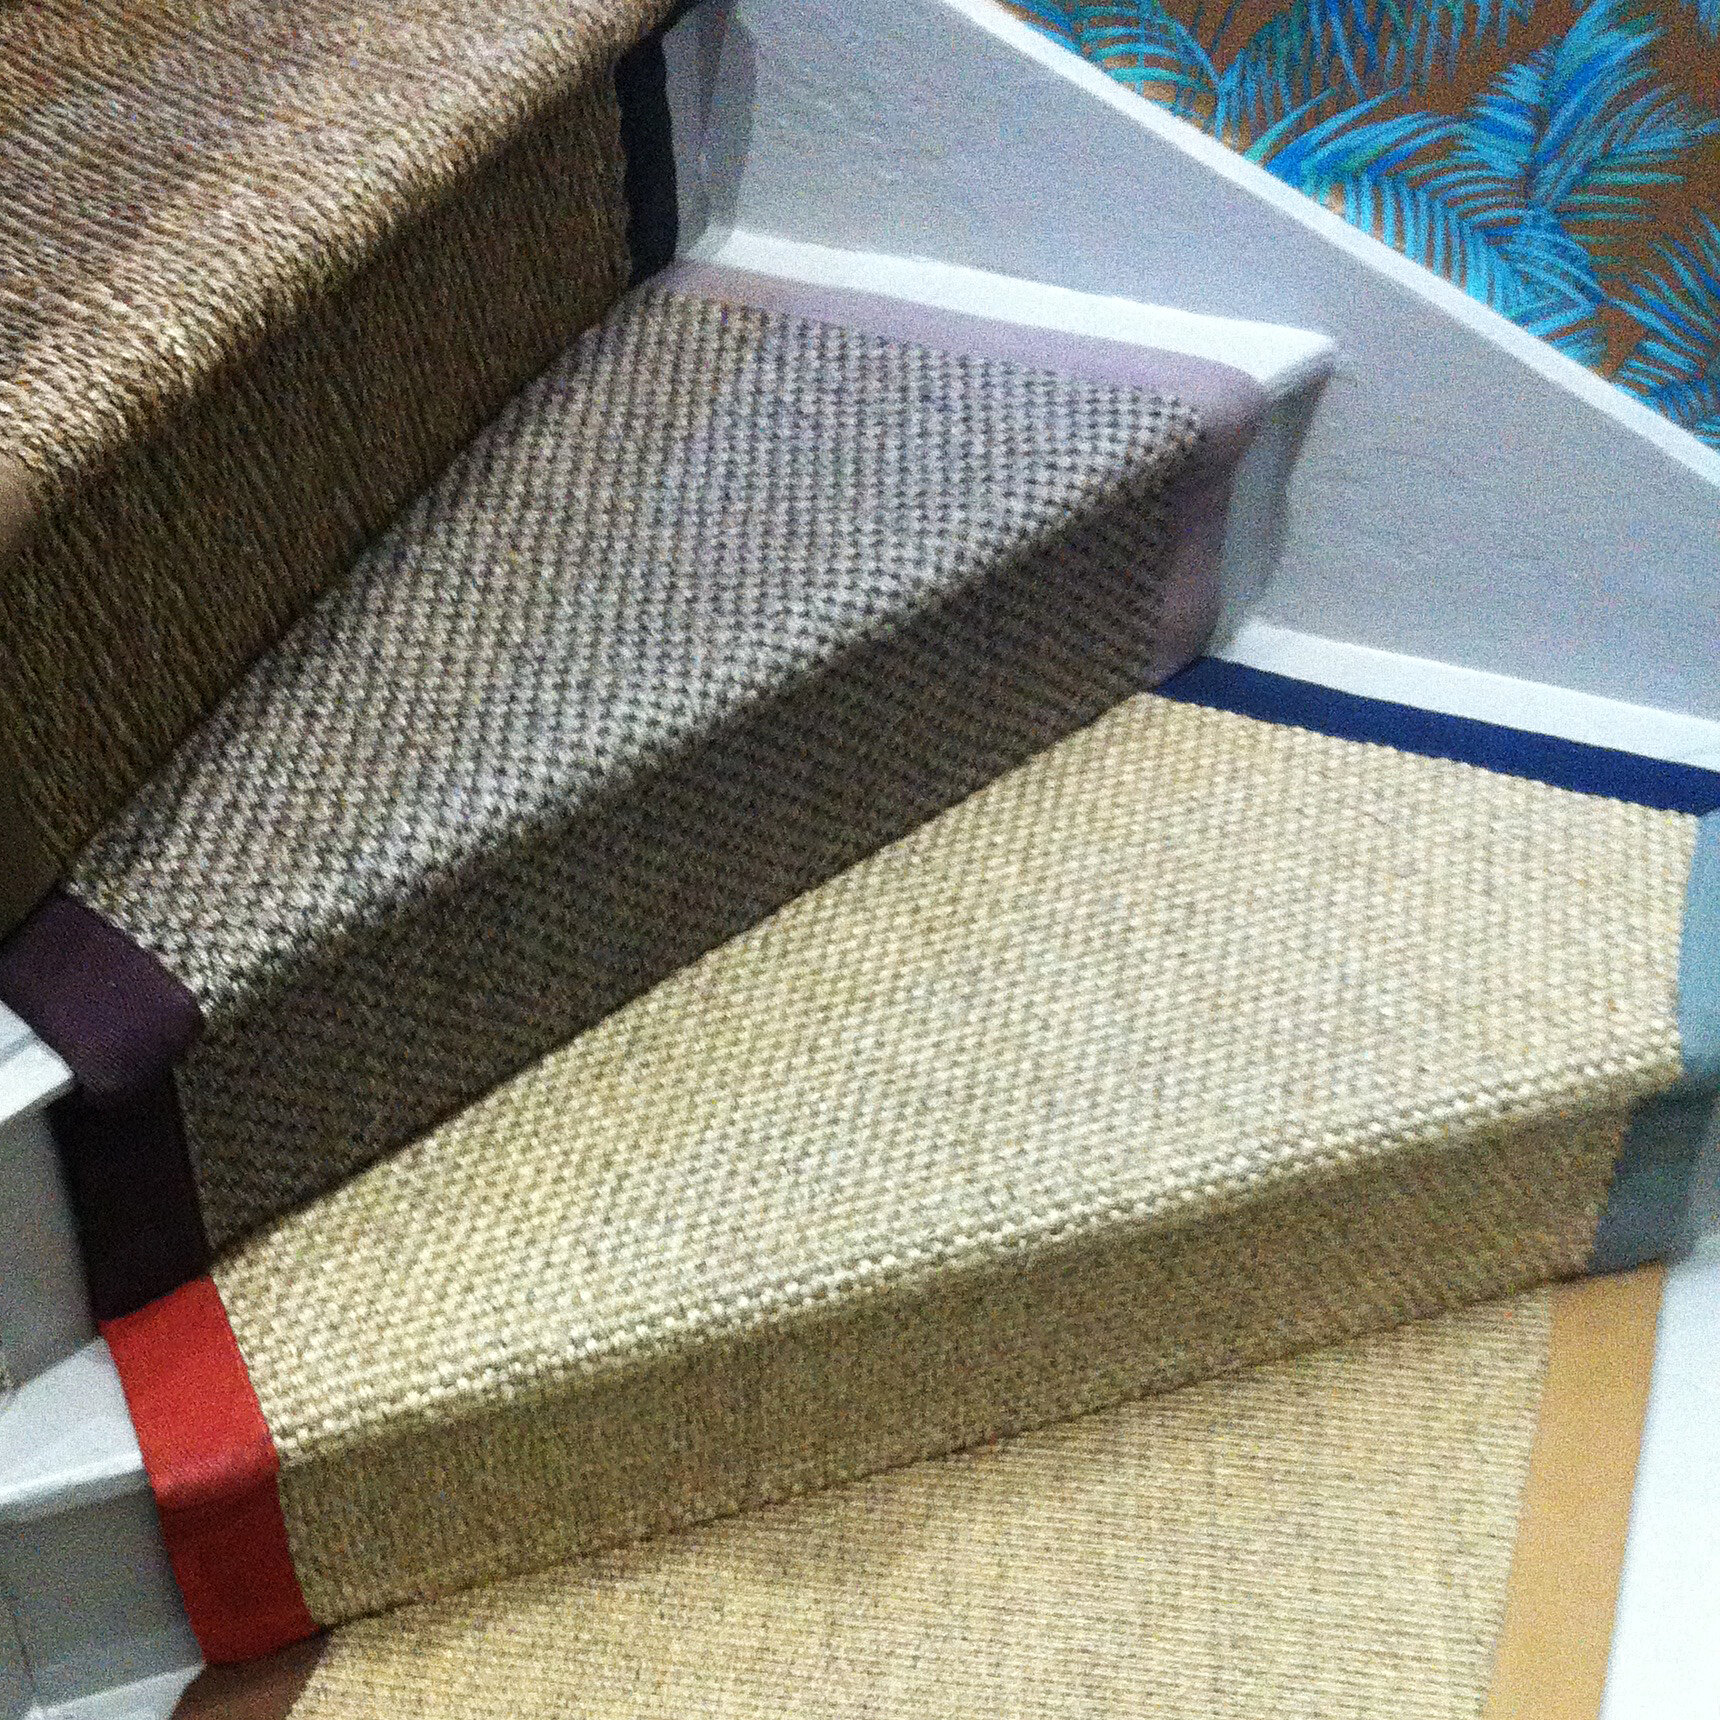 Gallery — On The Edge Limited - Premium, Bespoke Carpet Edging Service.